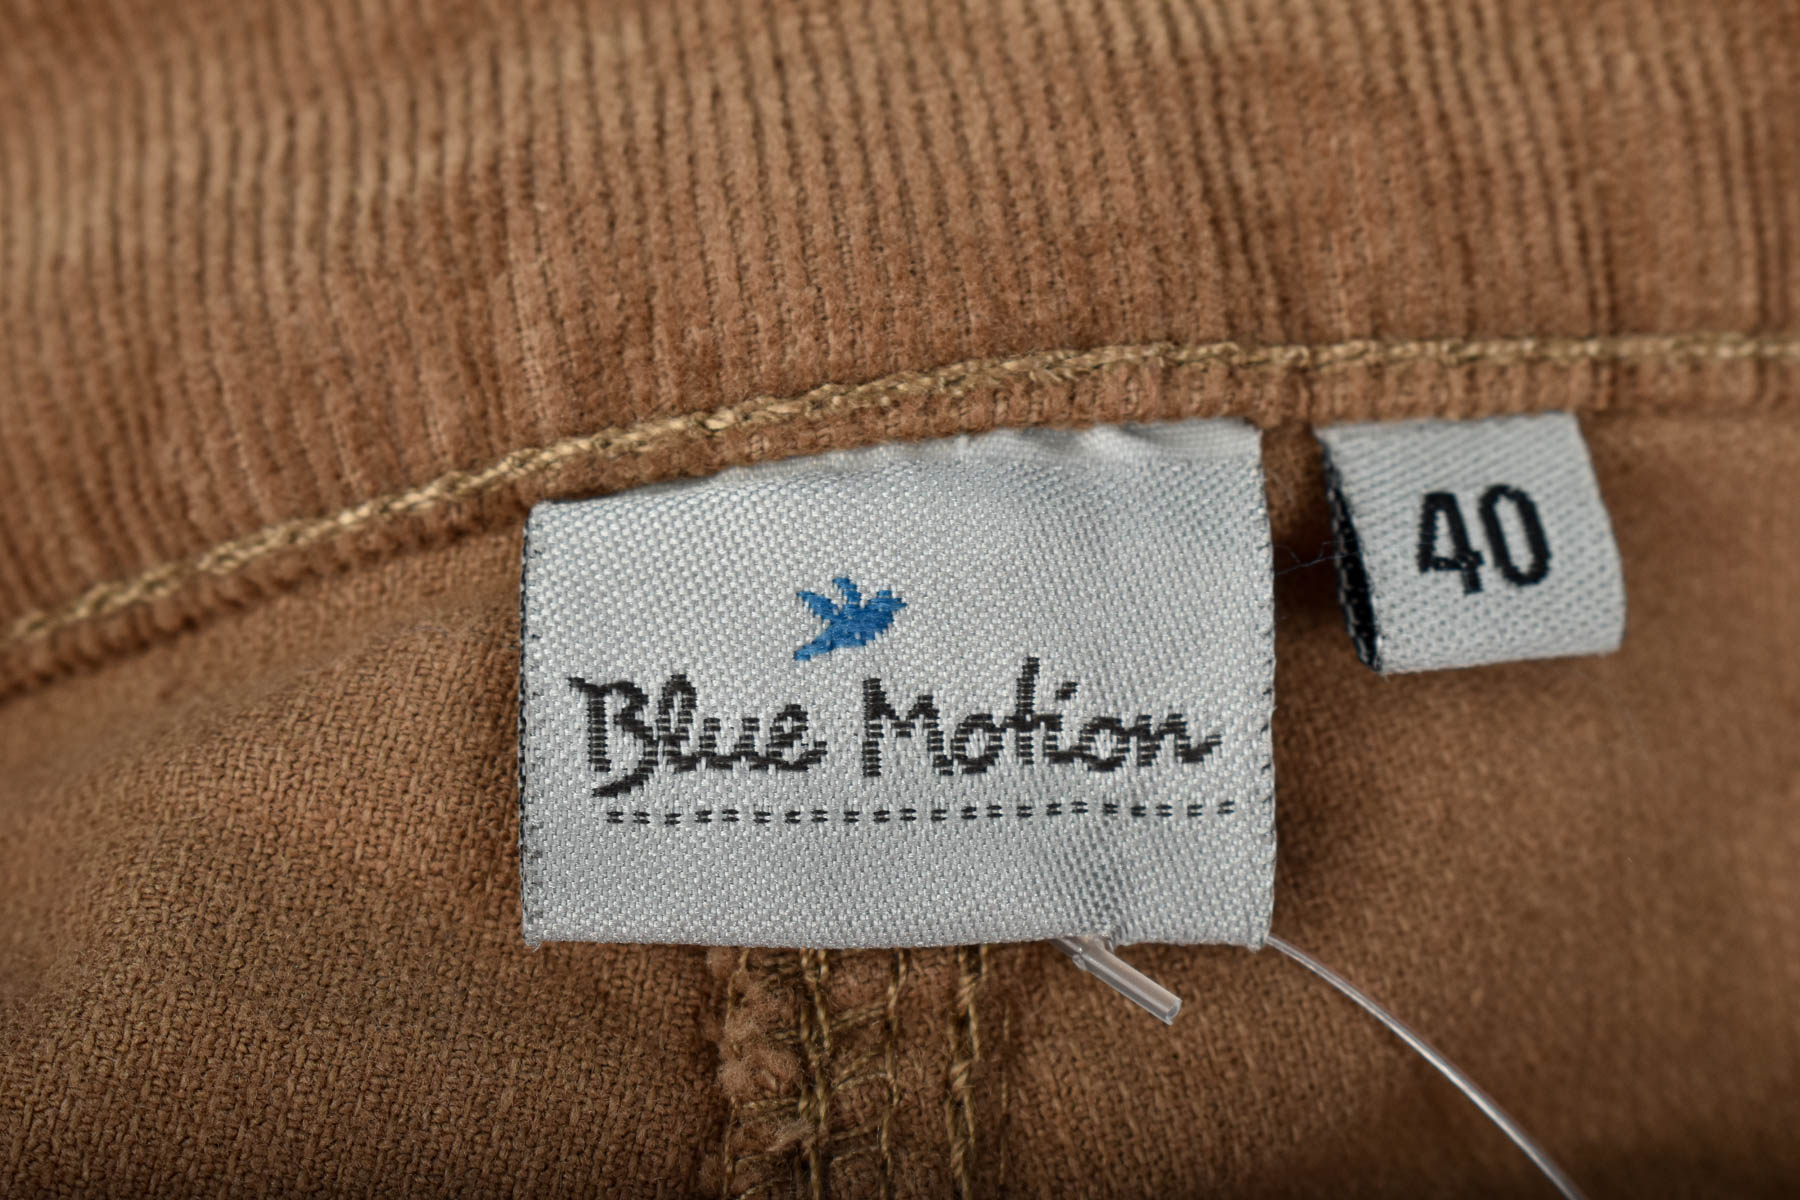 Spódnica - Blue Motion - 2